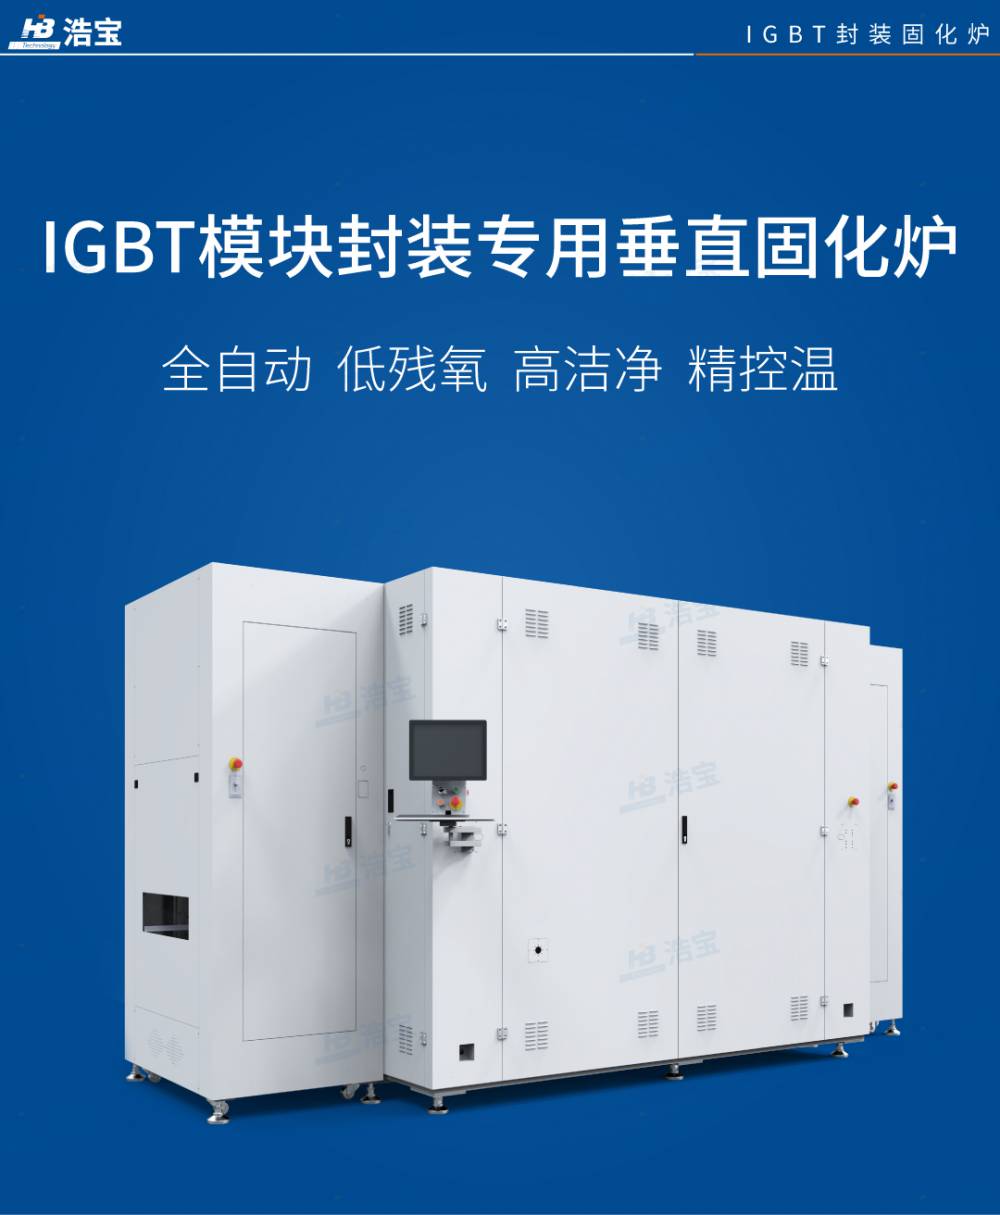 IGBT功率半导体模块封装垂直固化炉